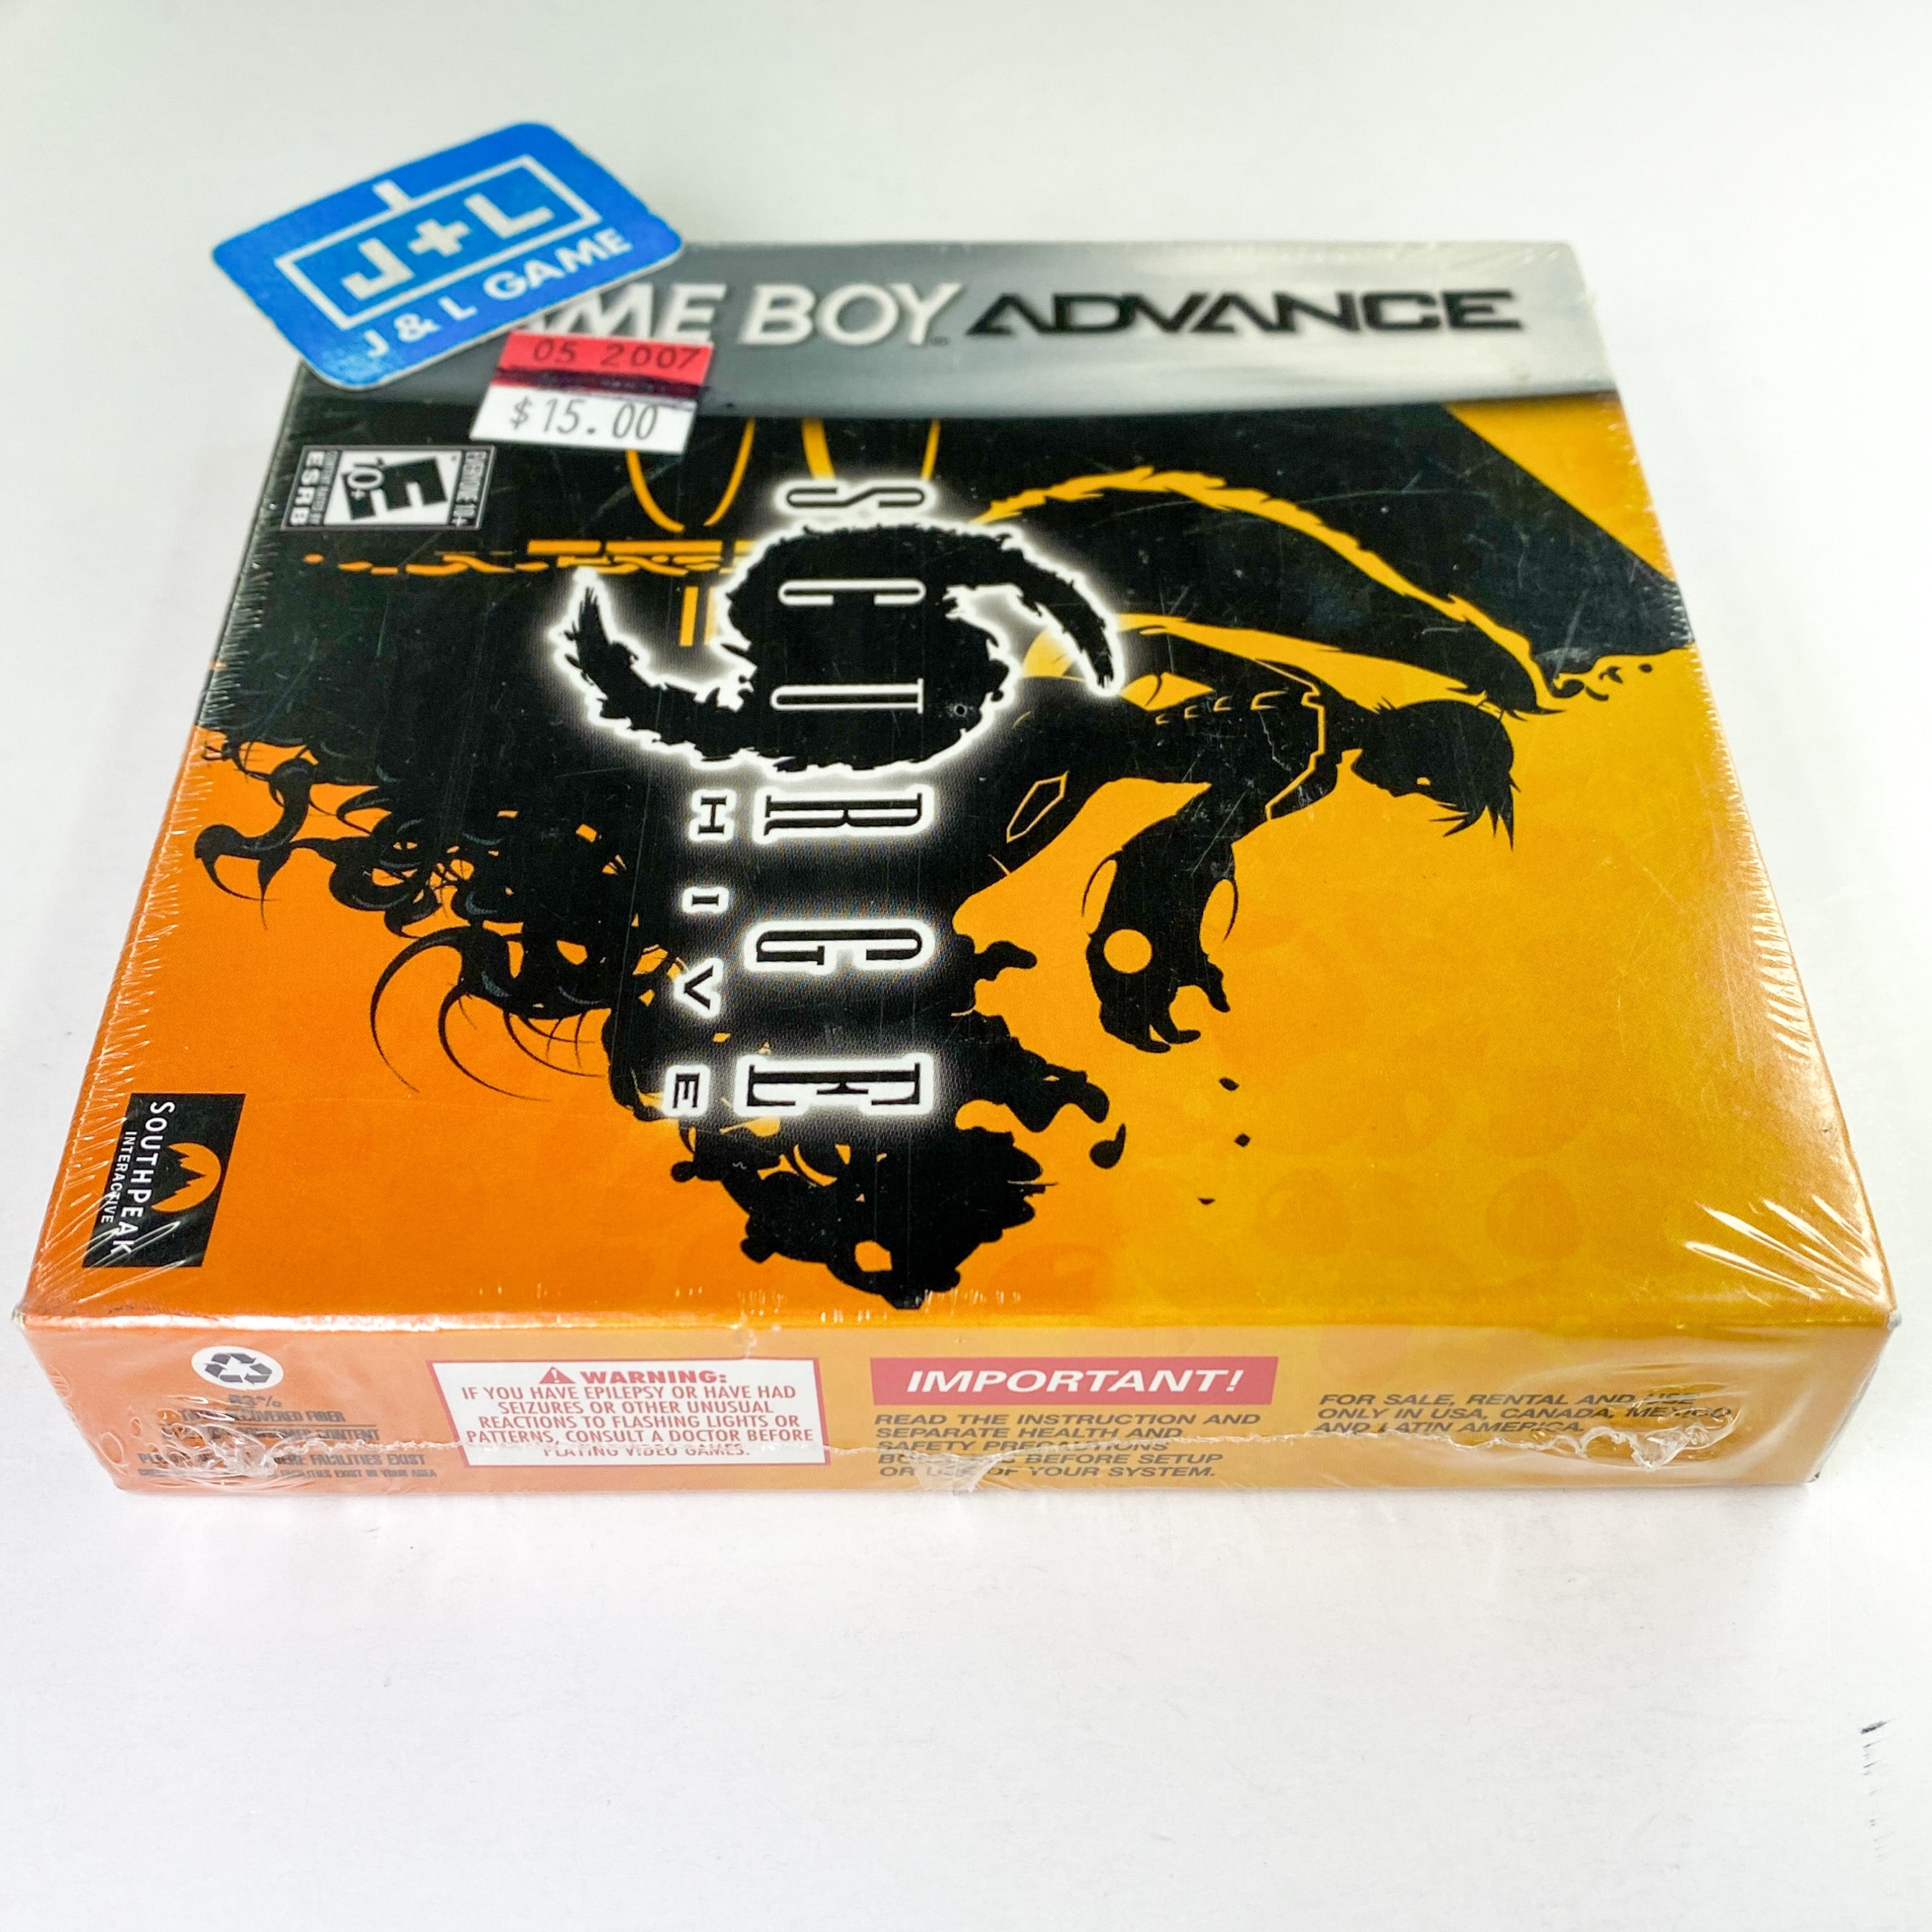 Scurge: Hive - (GBA) Game Boy Advance Video Games SouthPeak Games   